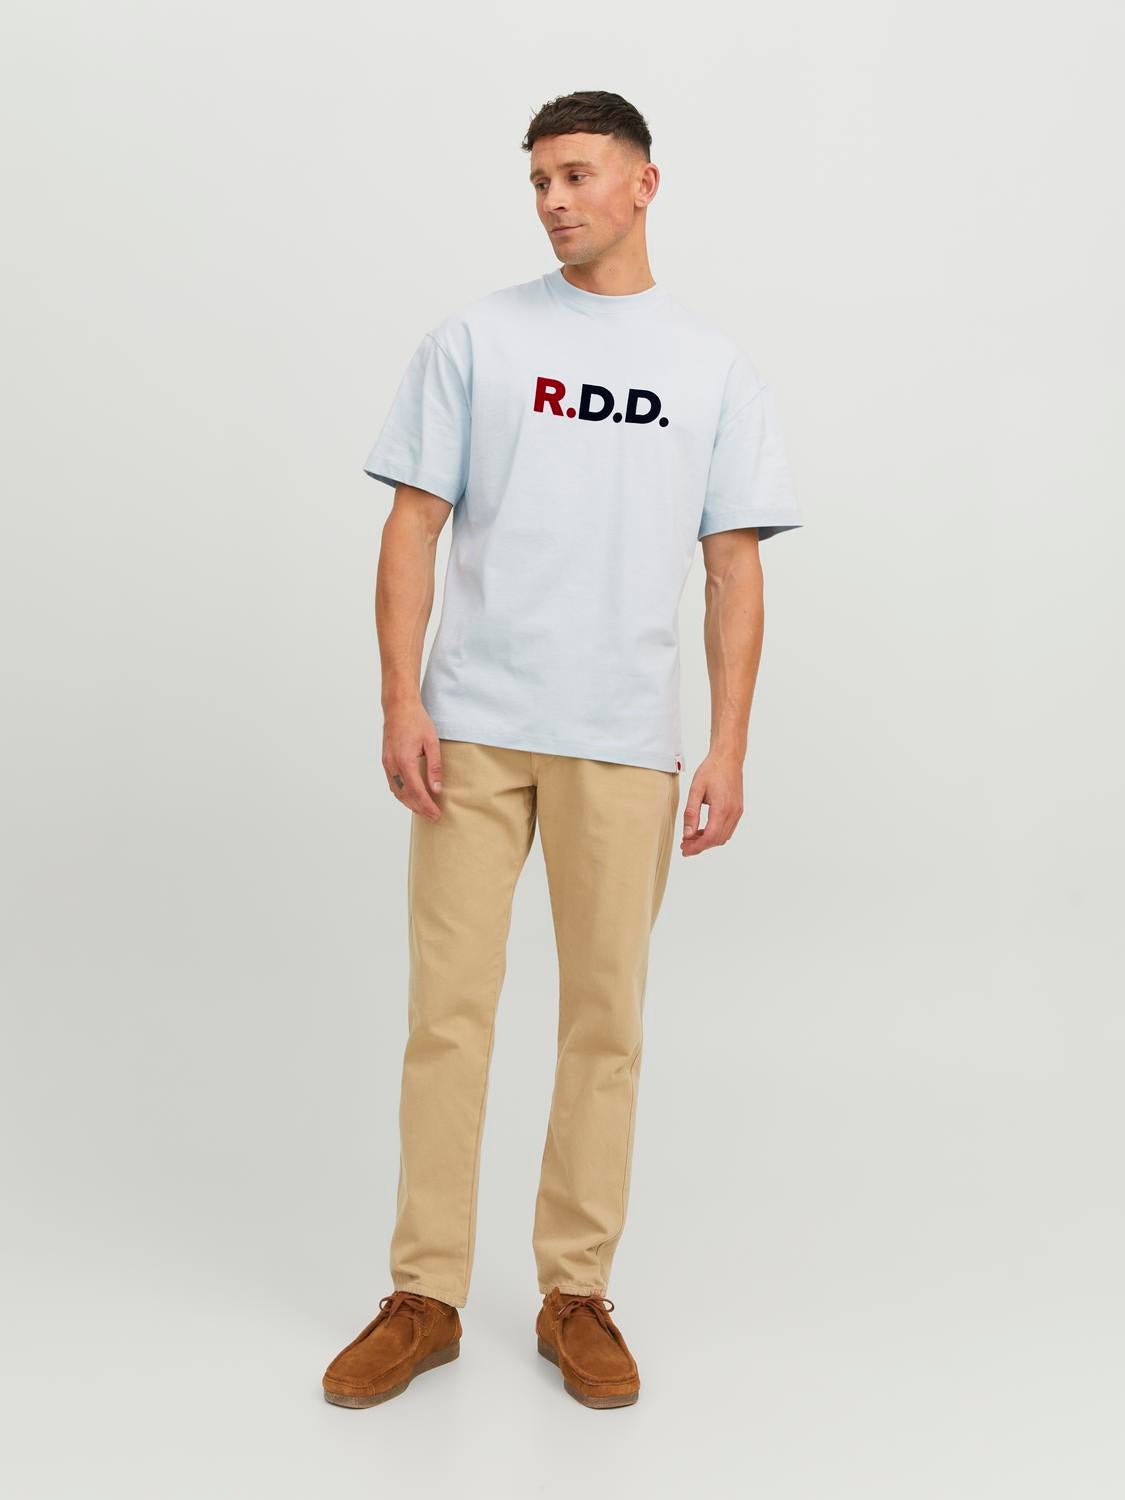 RDD Camiseta Logotipo Cuello redondo